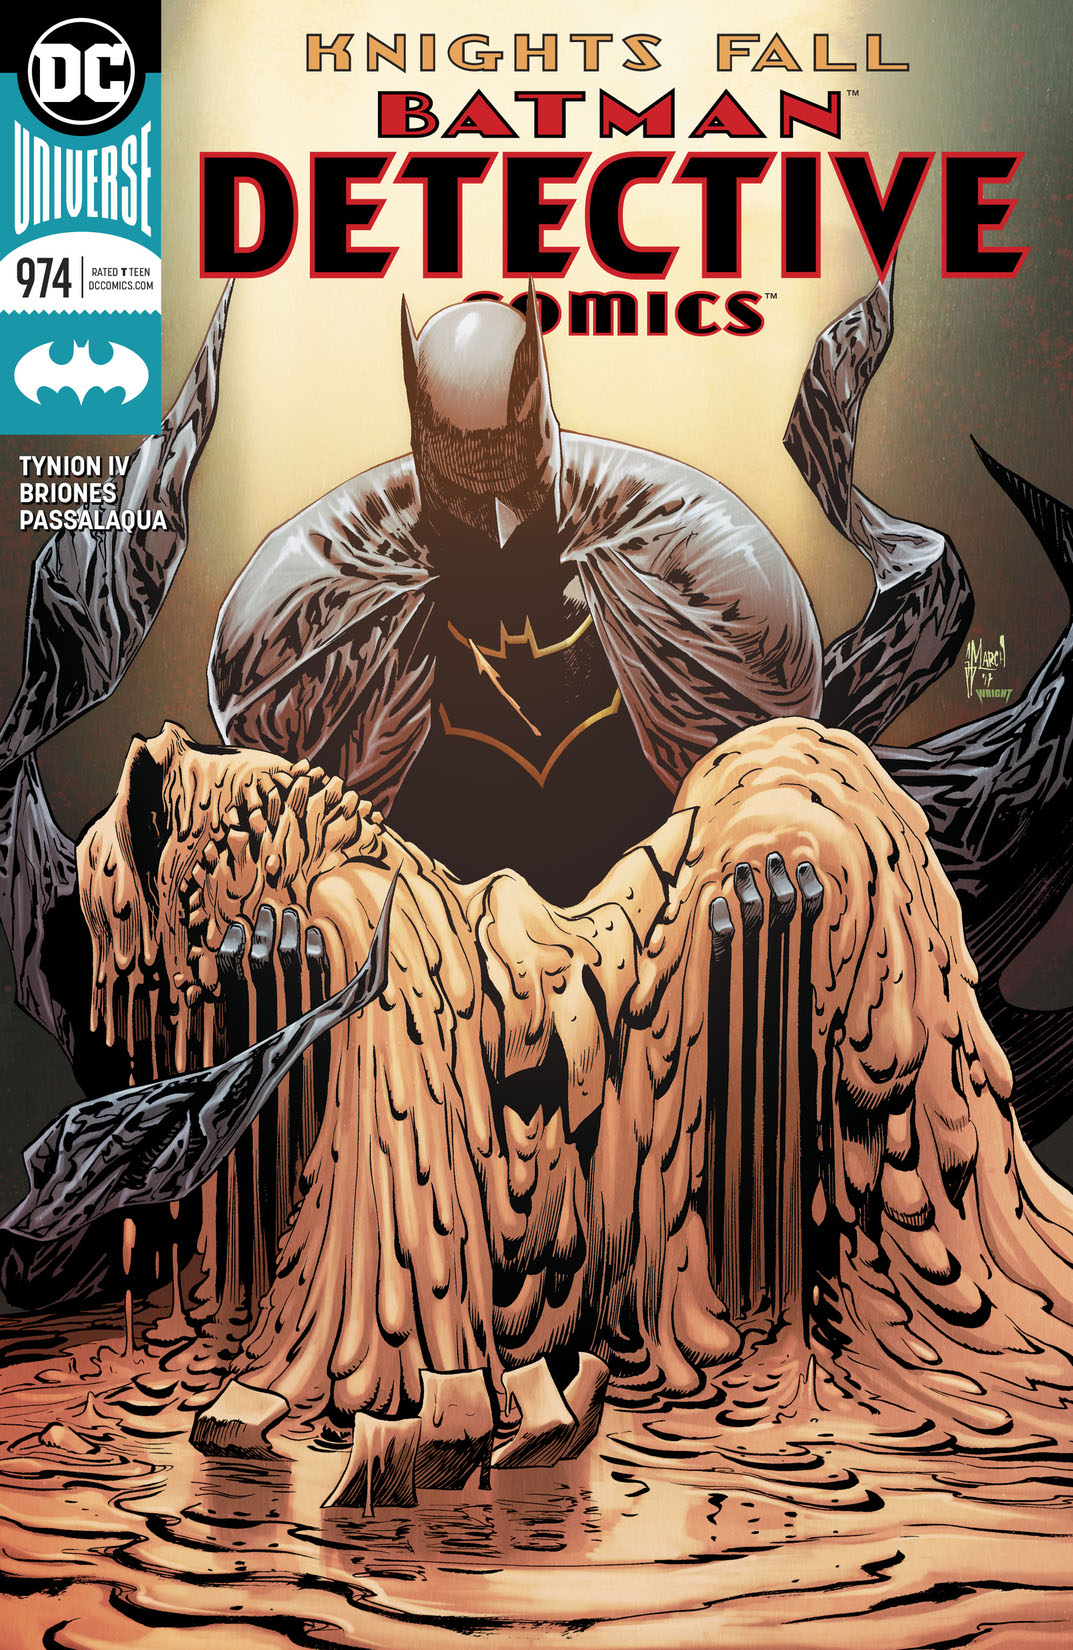 Detective Comics (2016-) #974 preview images